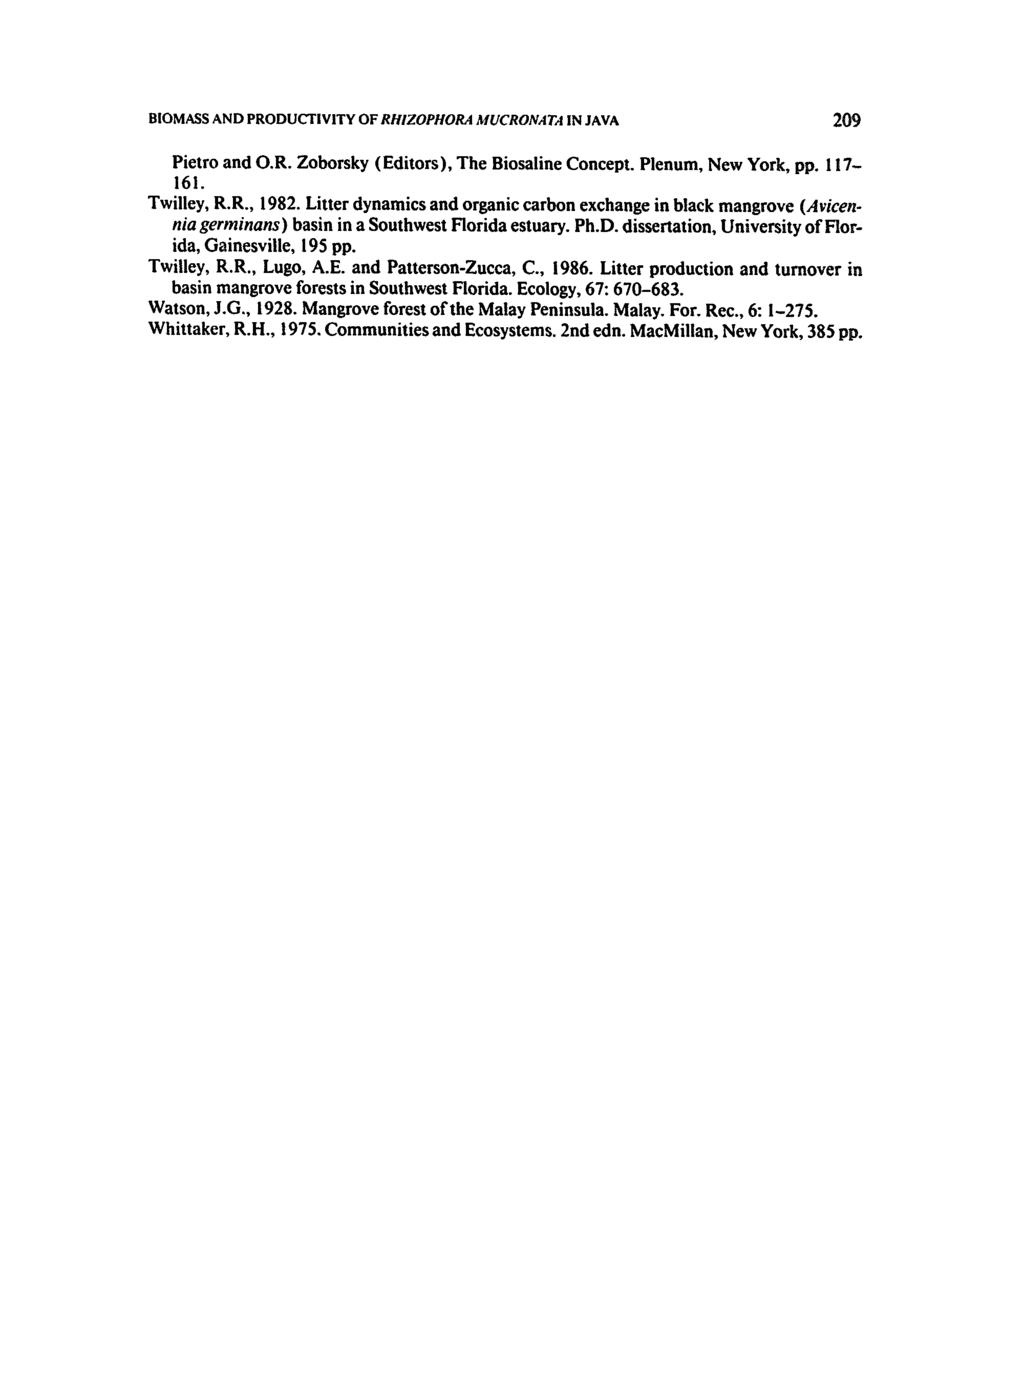 BIOMASS AND PRODUCTIVITY OF RHIZOPHORA MUCRONATA IN JAVA 209 Pietro and O.R. Zoborsky (Editors), The Biosaline Concept. Plenum, New York, pp. 117-161. Twilley, R.R., 1982.